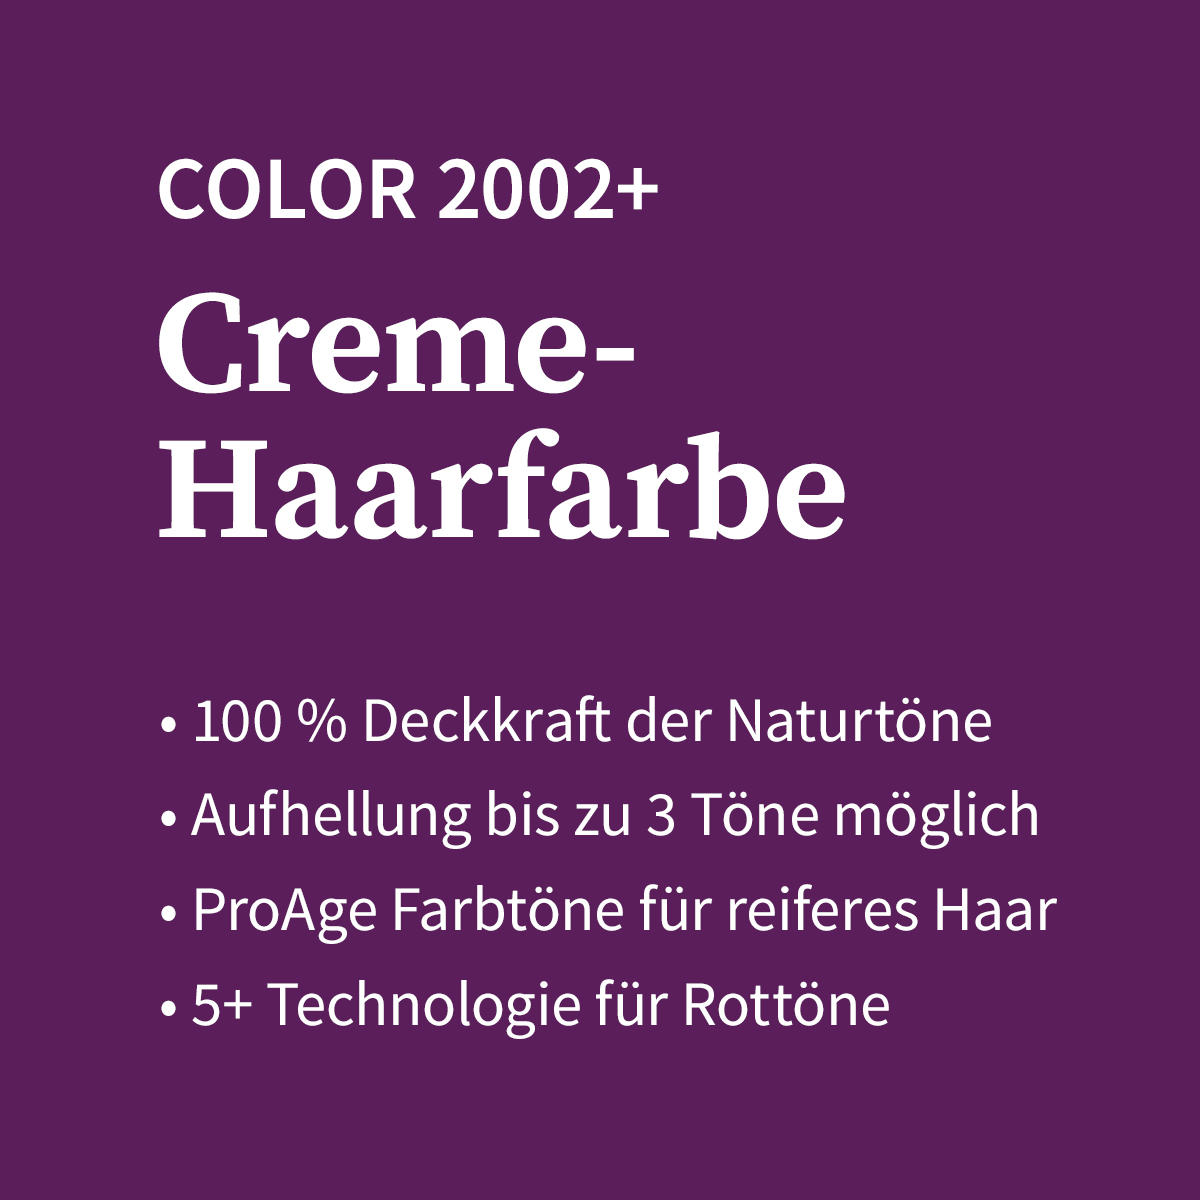 Basler Color 2002+ Cremehaarfarbe 7/2 mittelblond matt, Tube 60 ml - 4